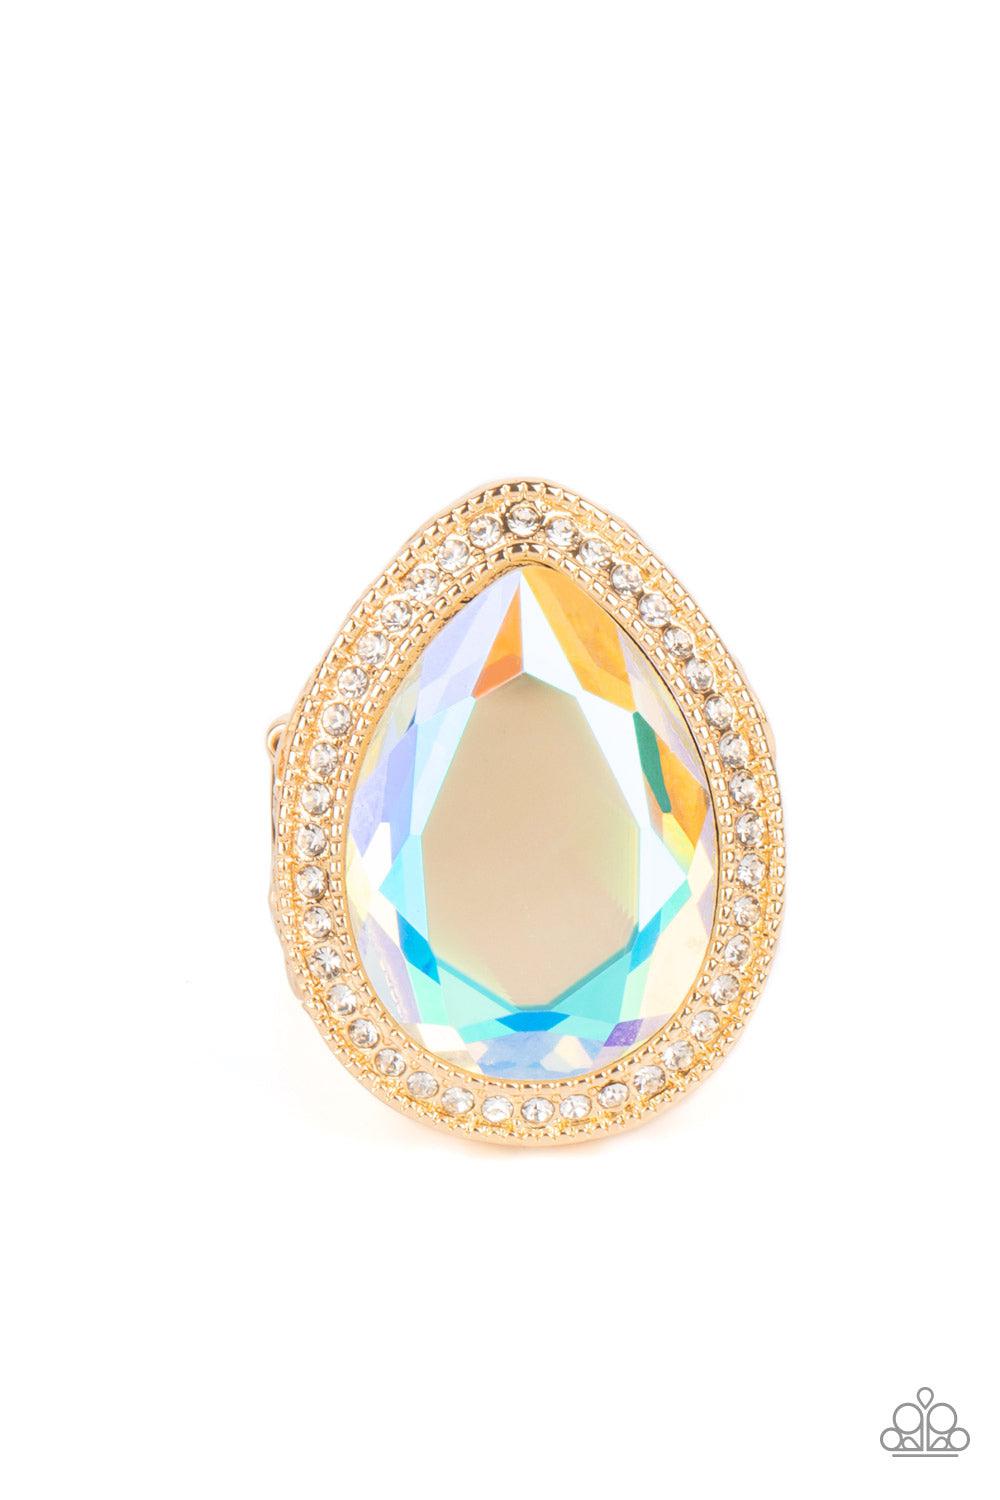 Illuminated Icon Gold &amp; Iridescent Rhinestone Ring - Paparazzi Accessories- lightbox - CarasShop.com - $5 Jewelry by Cara Jewels